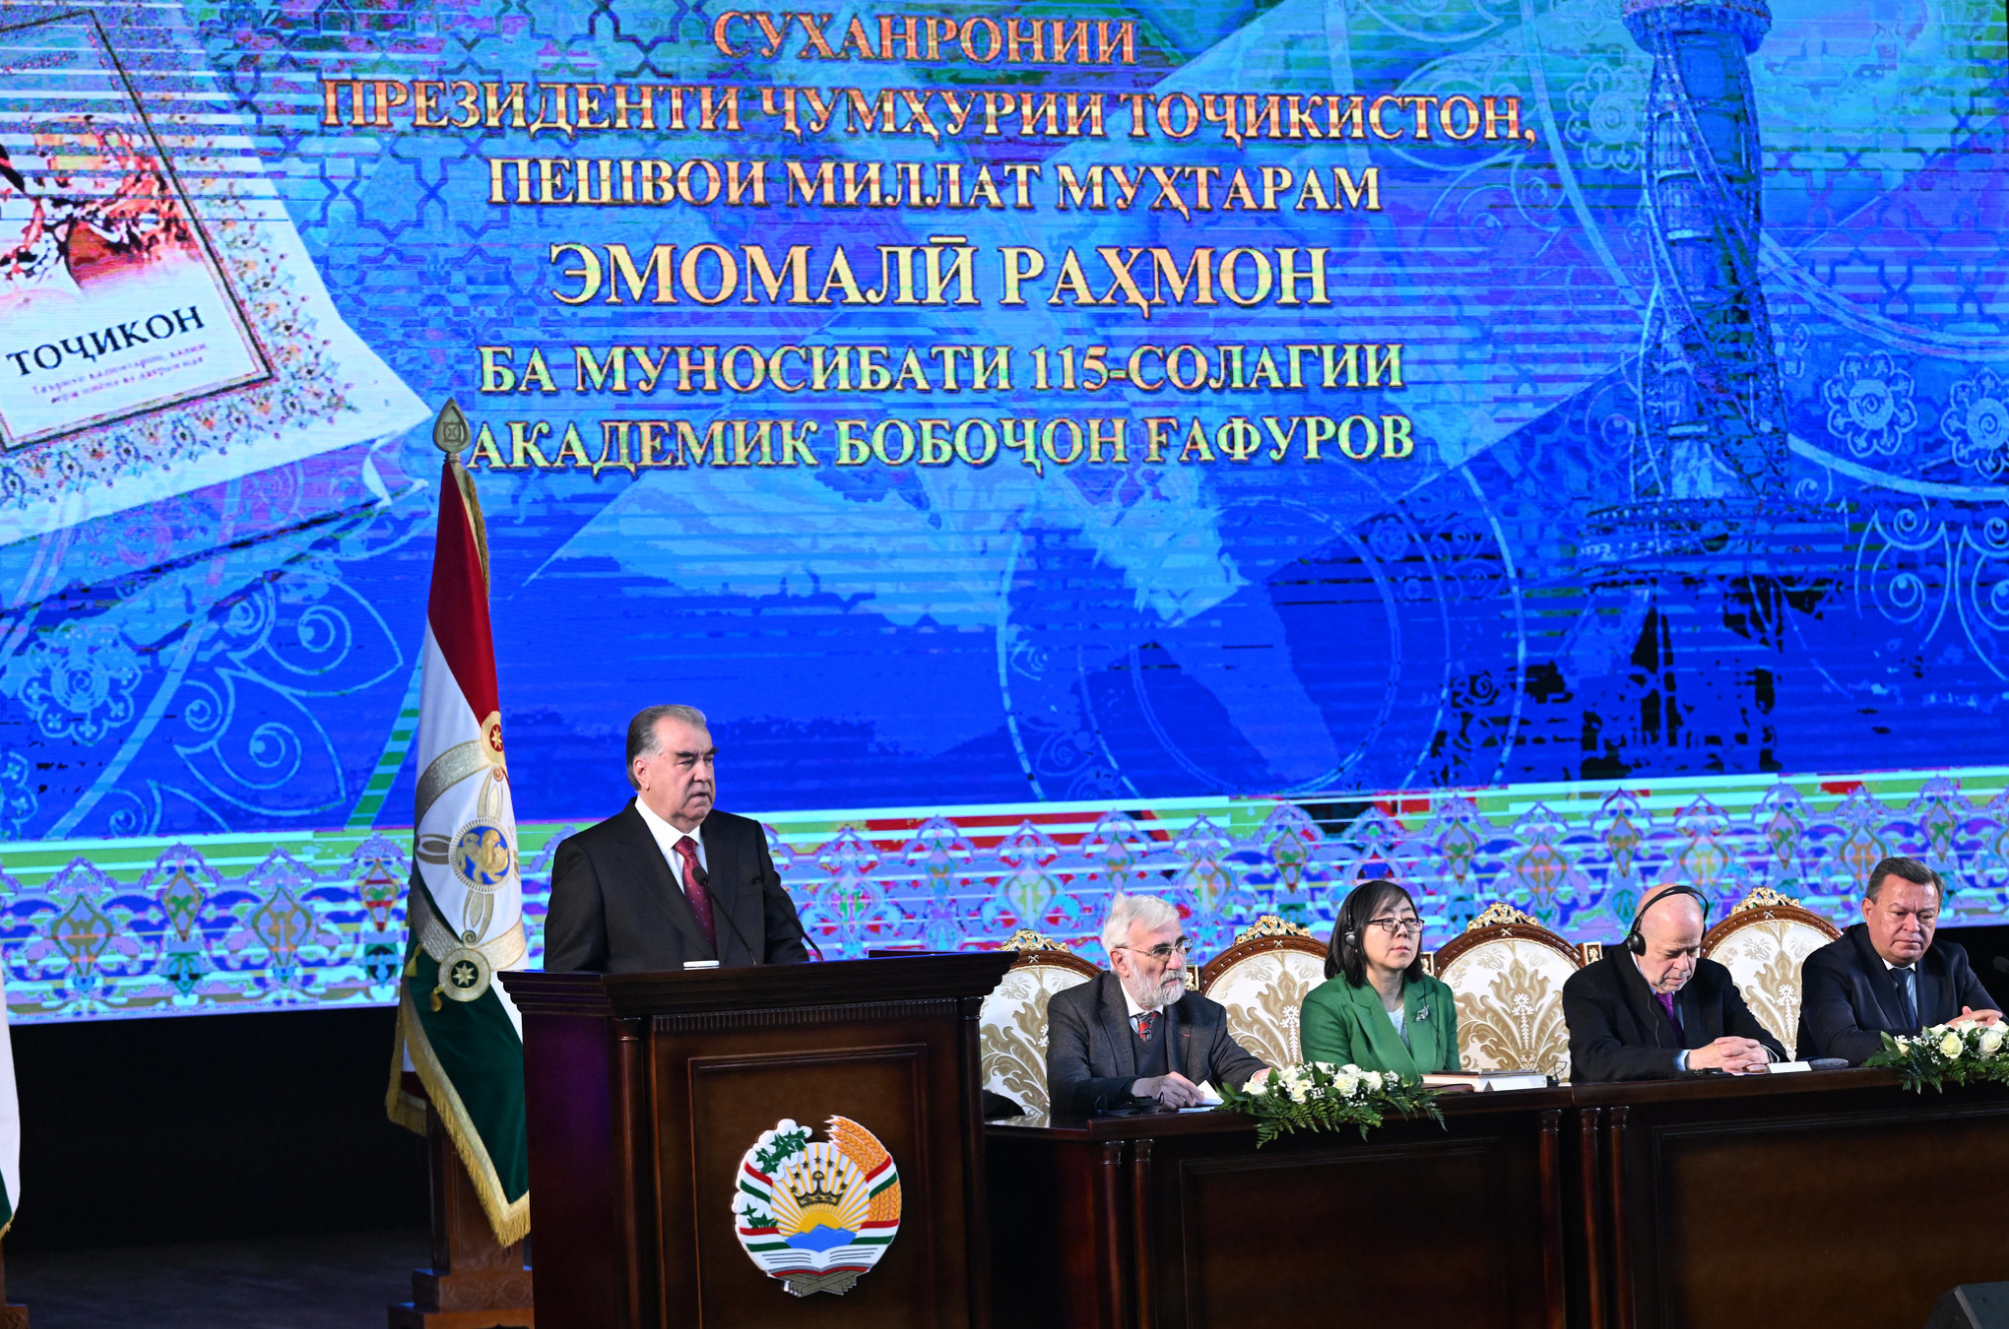 President Emomali Rahmon highlights Academician Gafurov's impact on Tajikistan's development at the symposium.